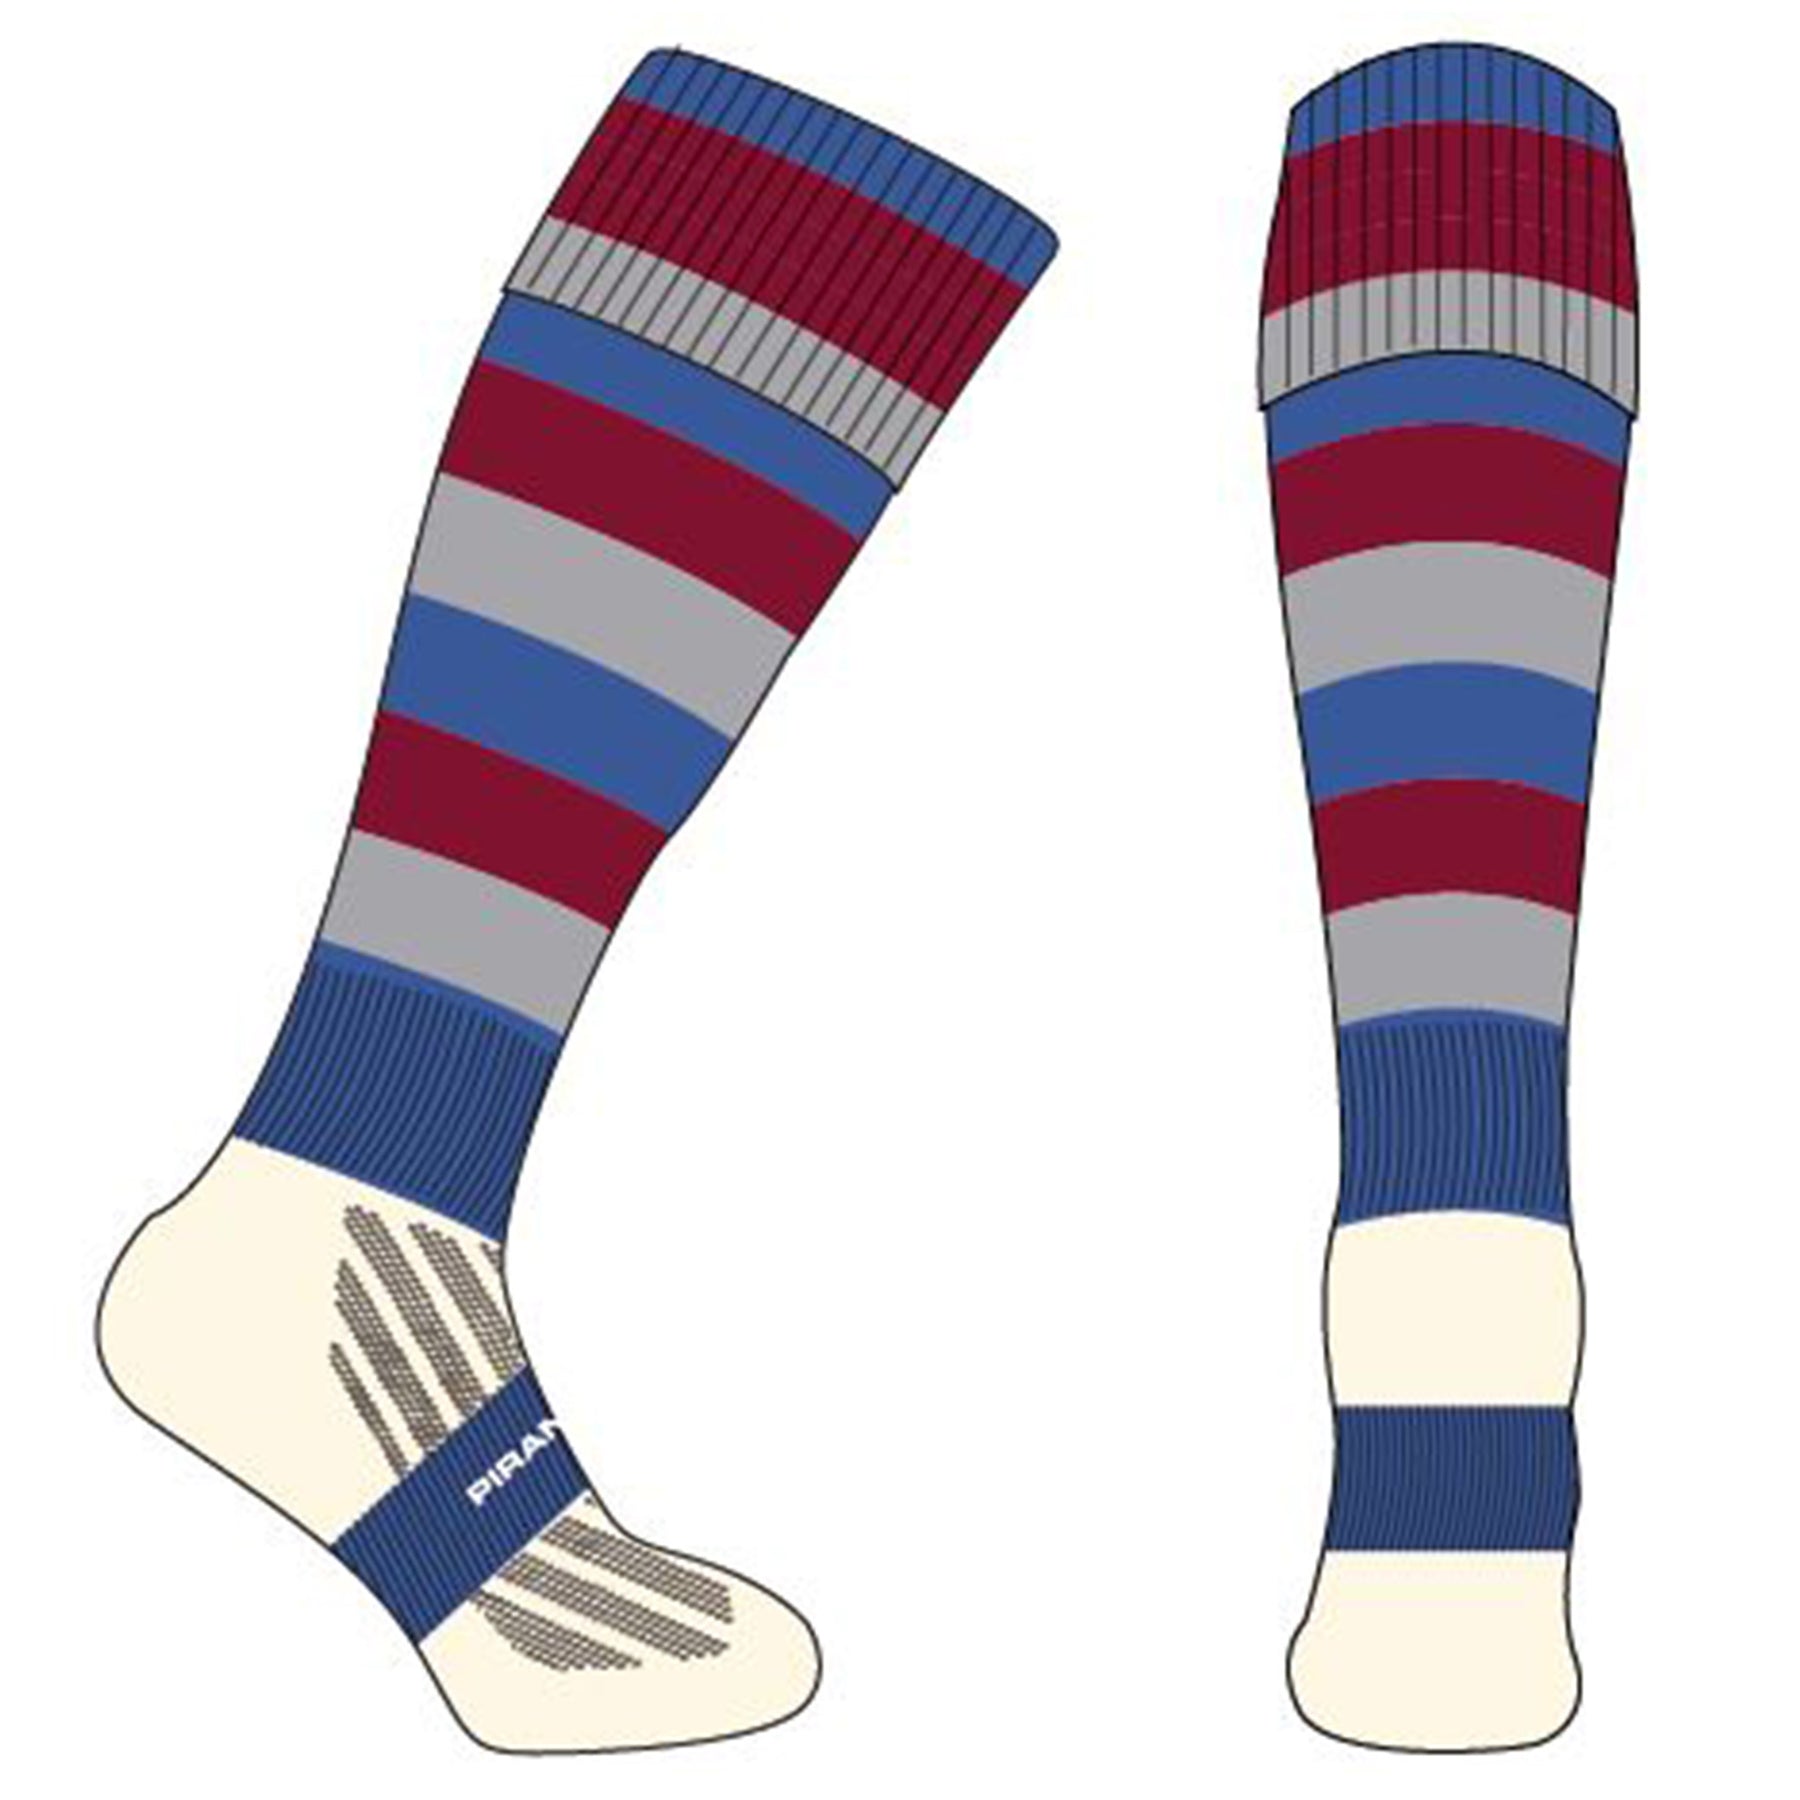 Royal Grammar School Games Socks